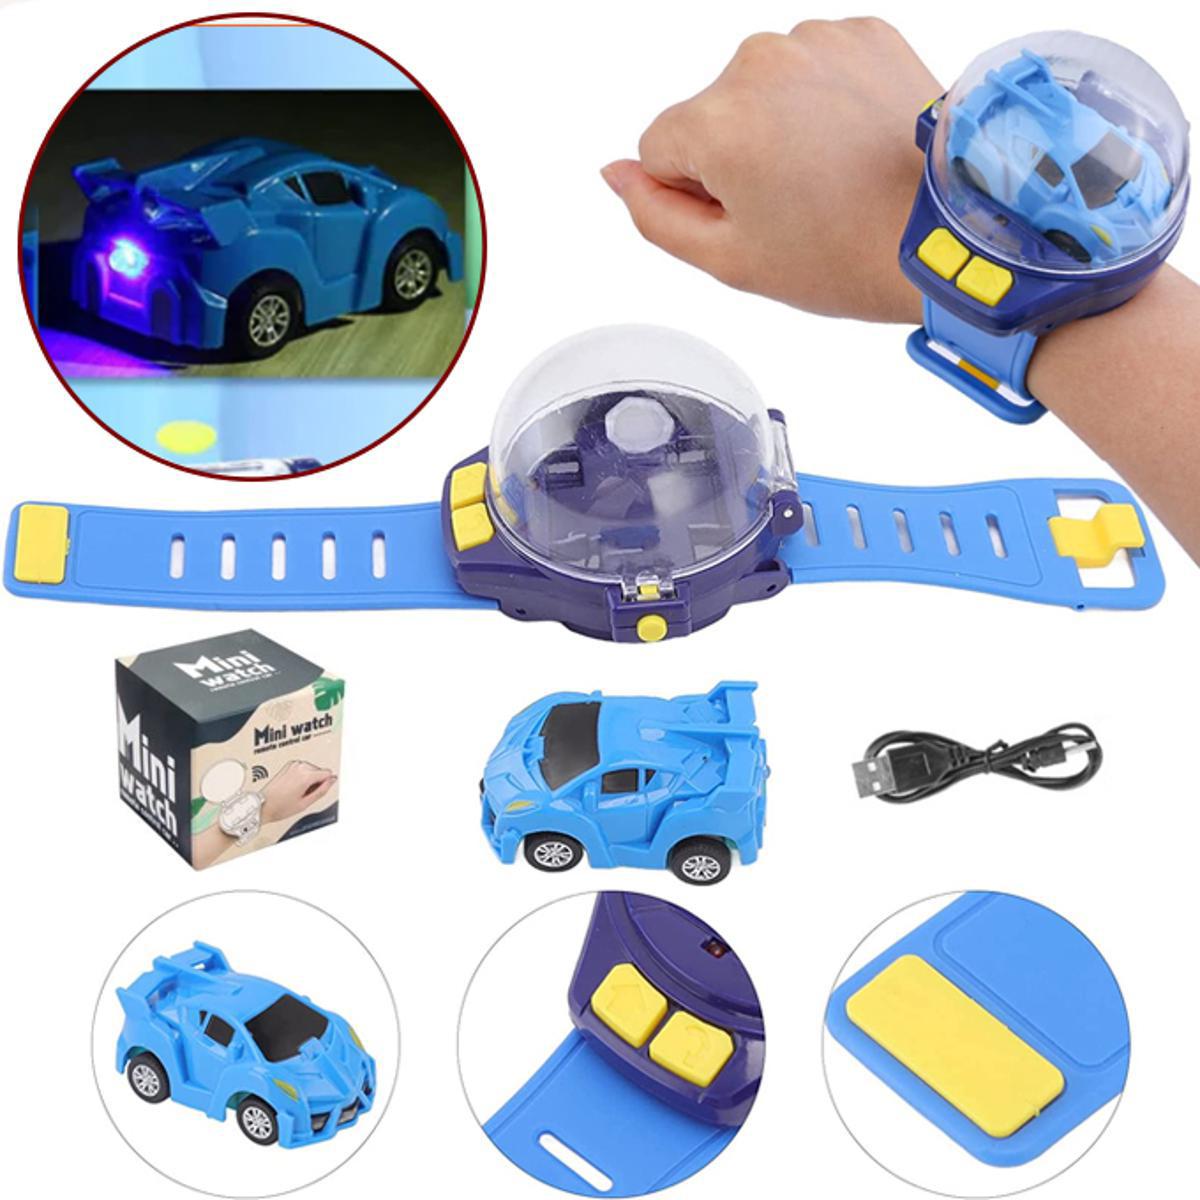 Mini Wrist Watch Remote Control Car: Purchasing a Mini Wrist Watch Remote Control Car: What You Need to Know